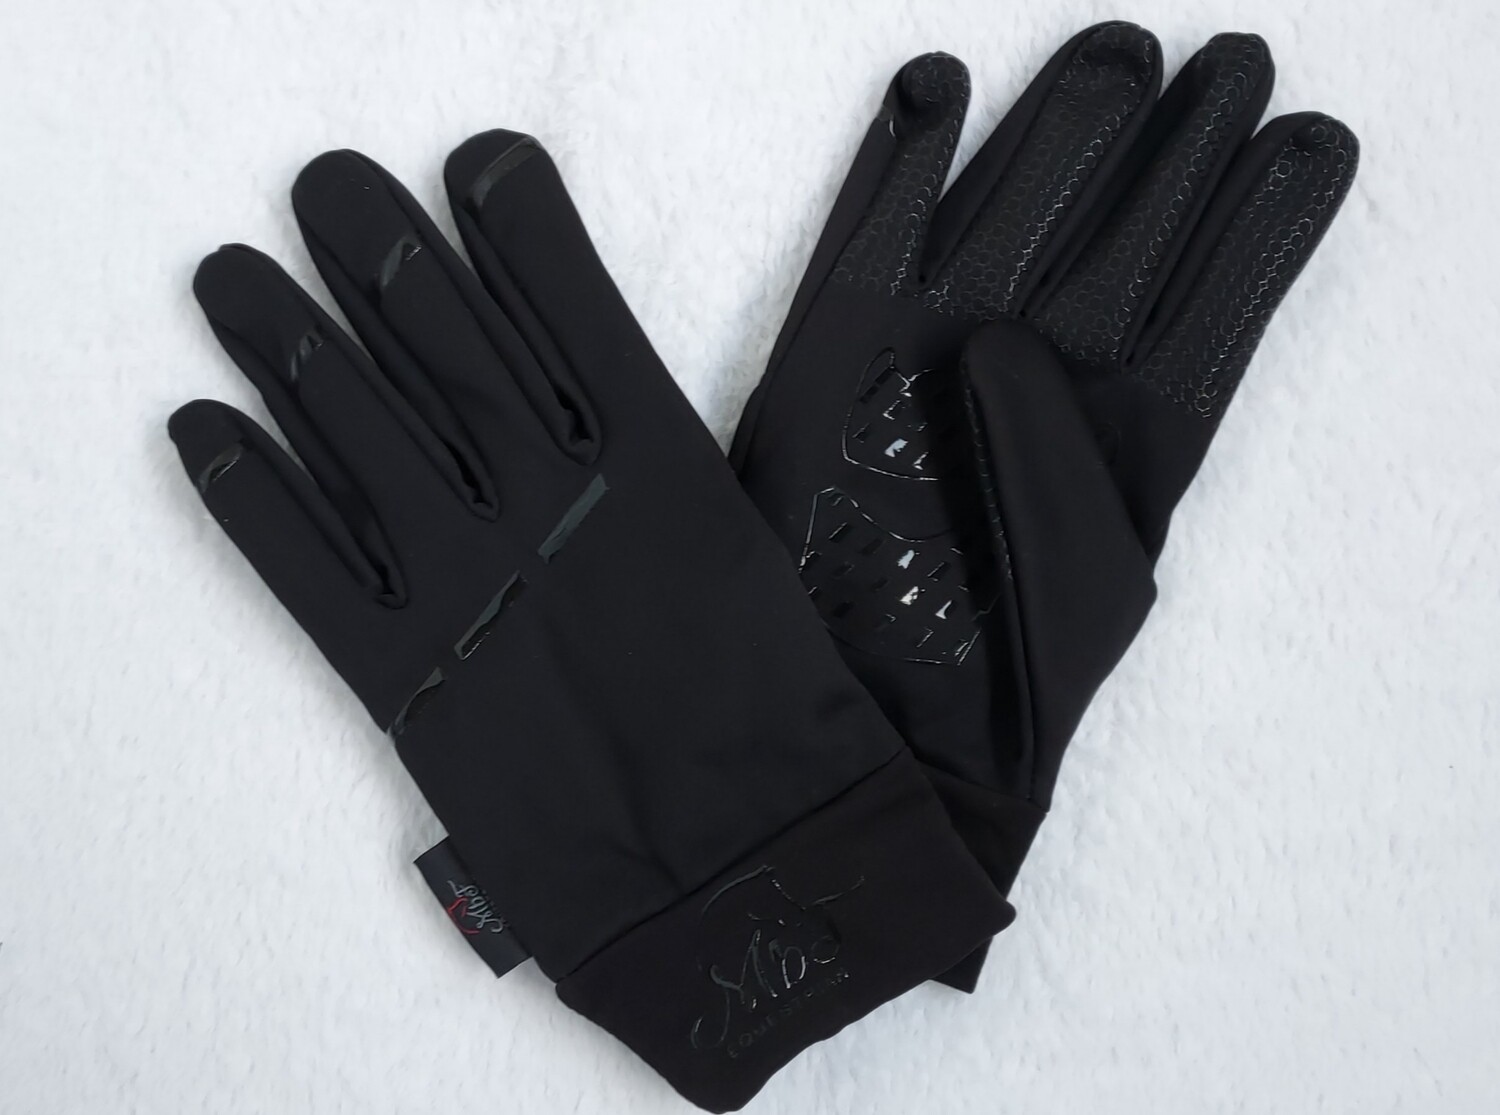 MbF winter gloves